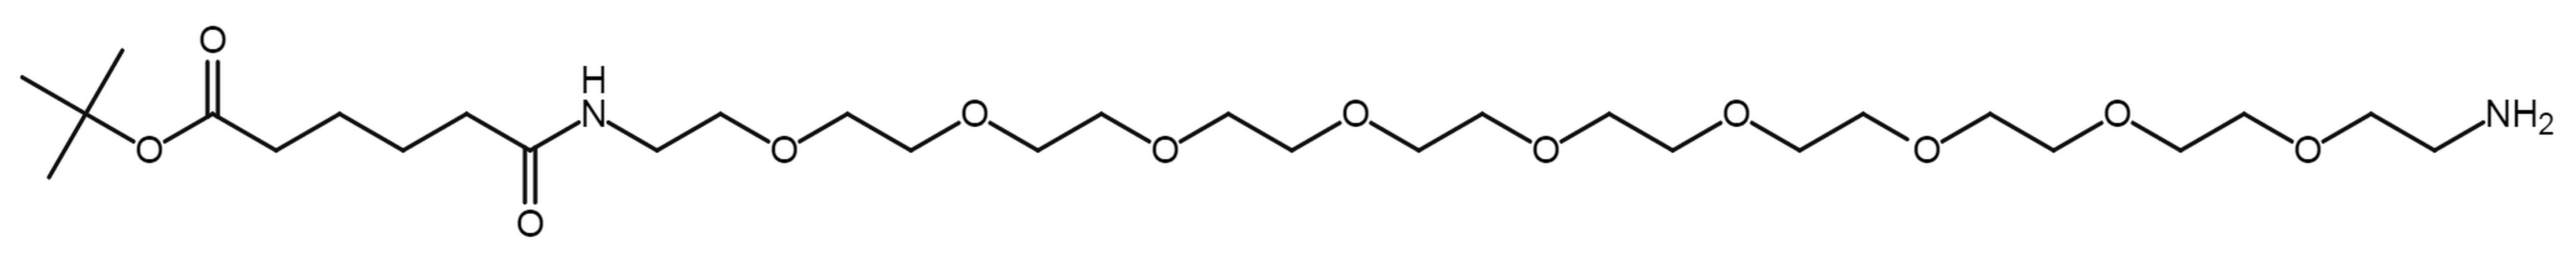 17-(amine-PEG9-ethylcarbamoyl)pentanoic t-butyl ester